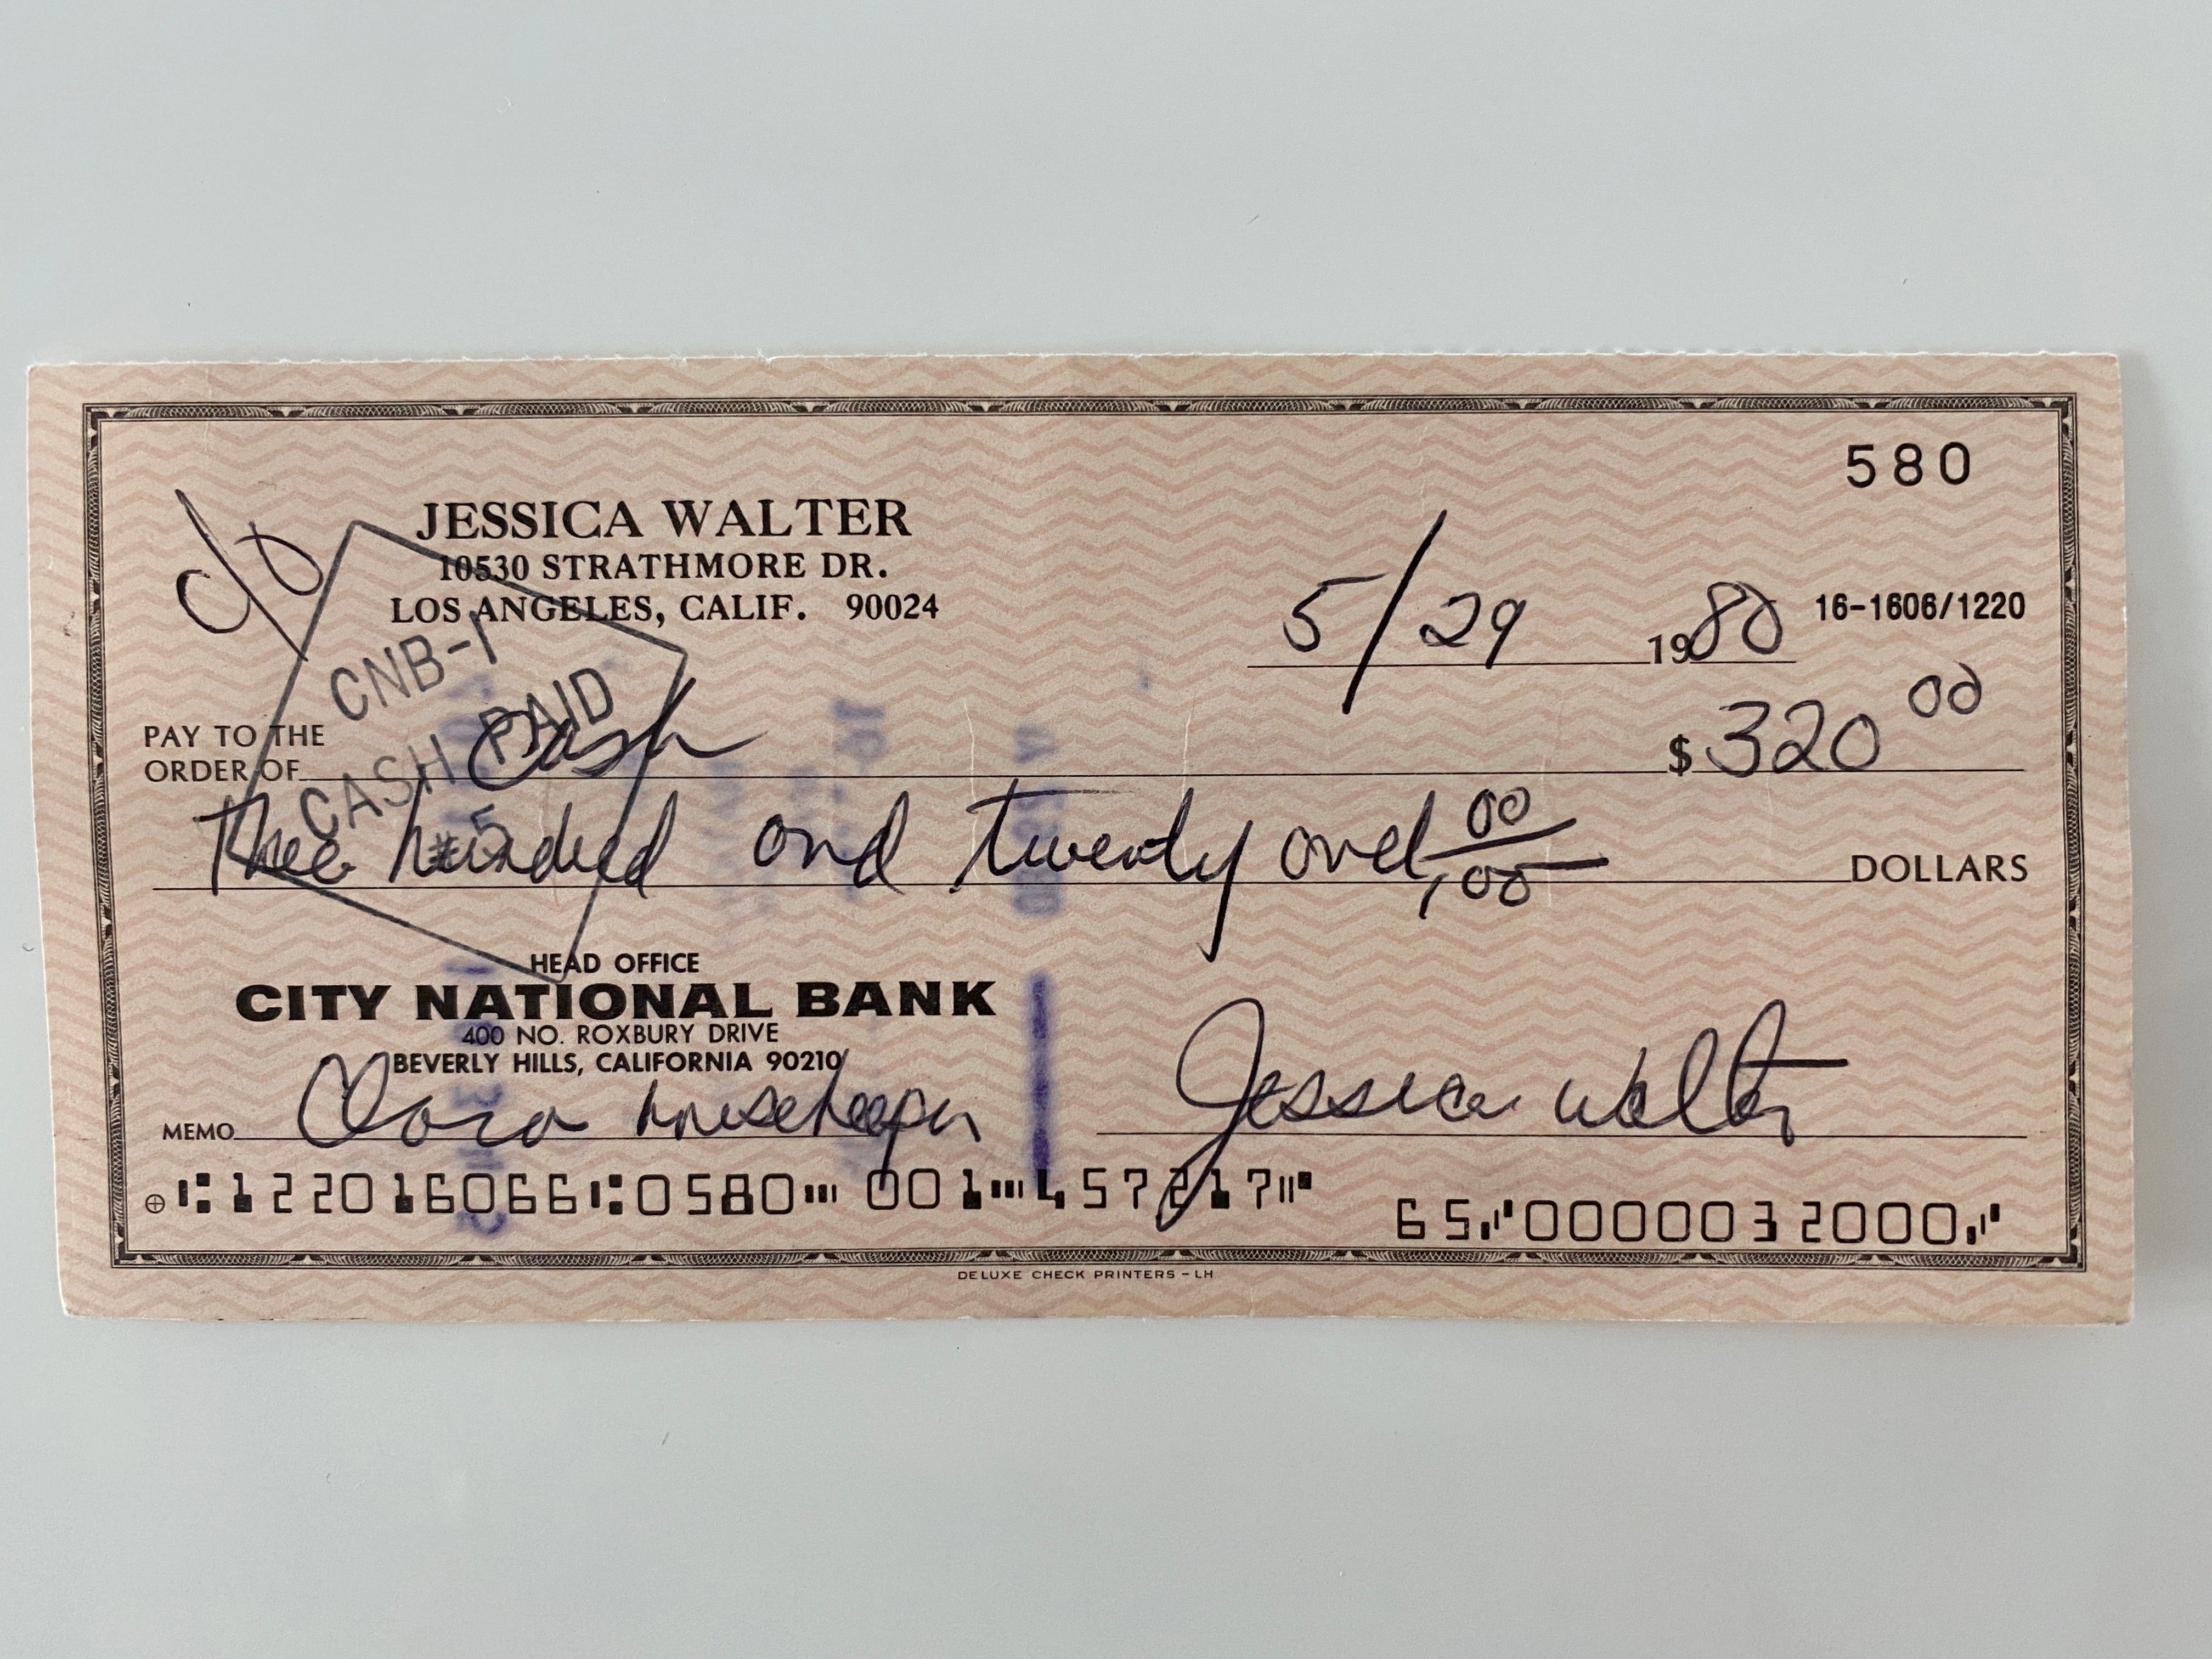 Jessica Walter signed check 